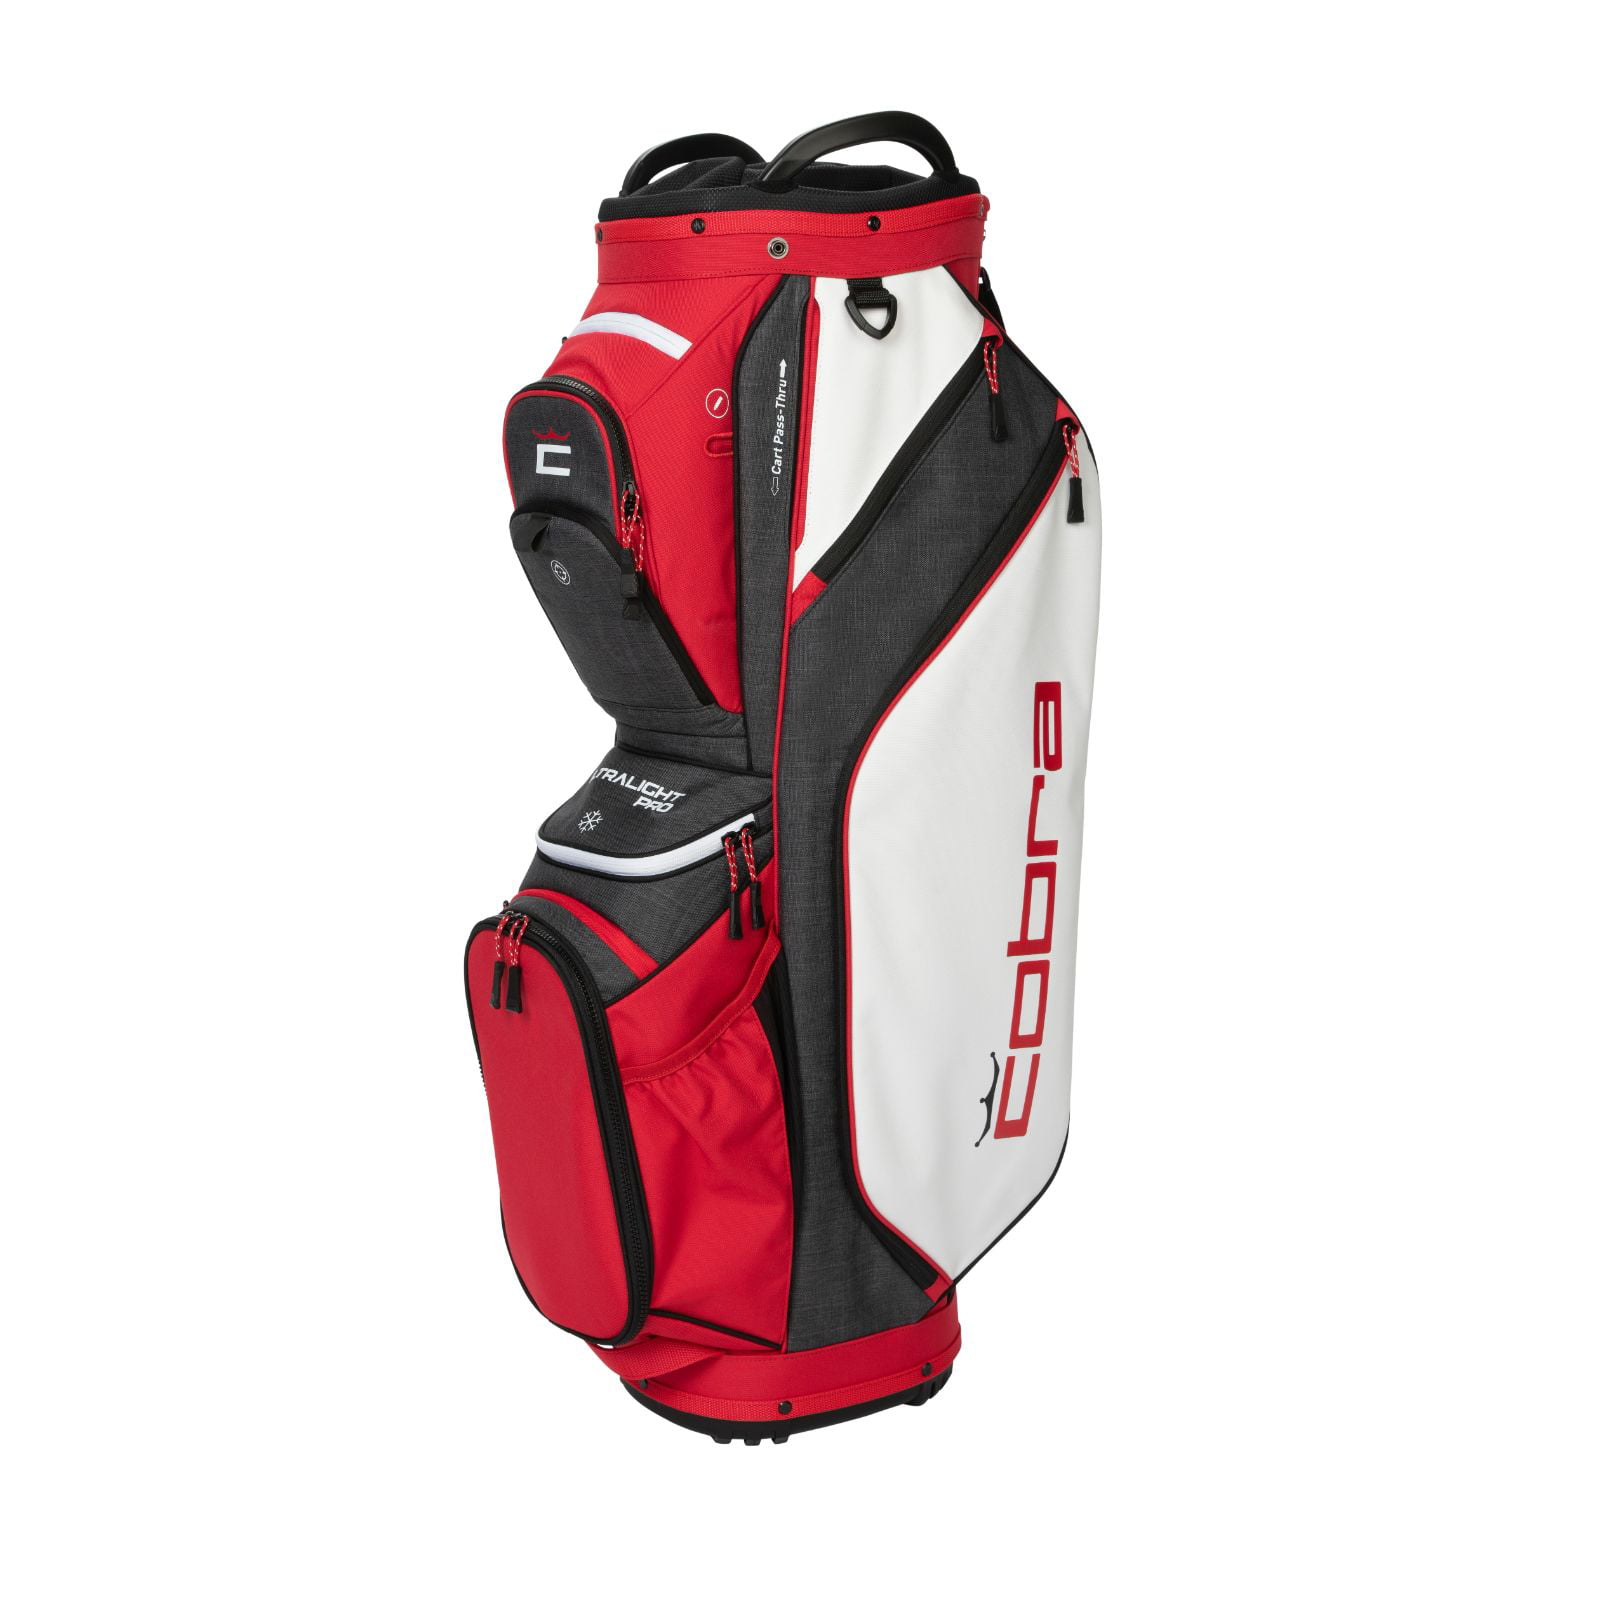 Cobra Ultralight Golf Club Cart Bag-Ski Black, Red and White - Walmart.com